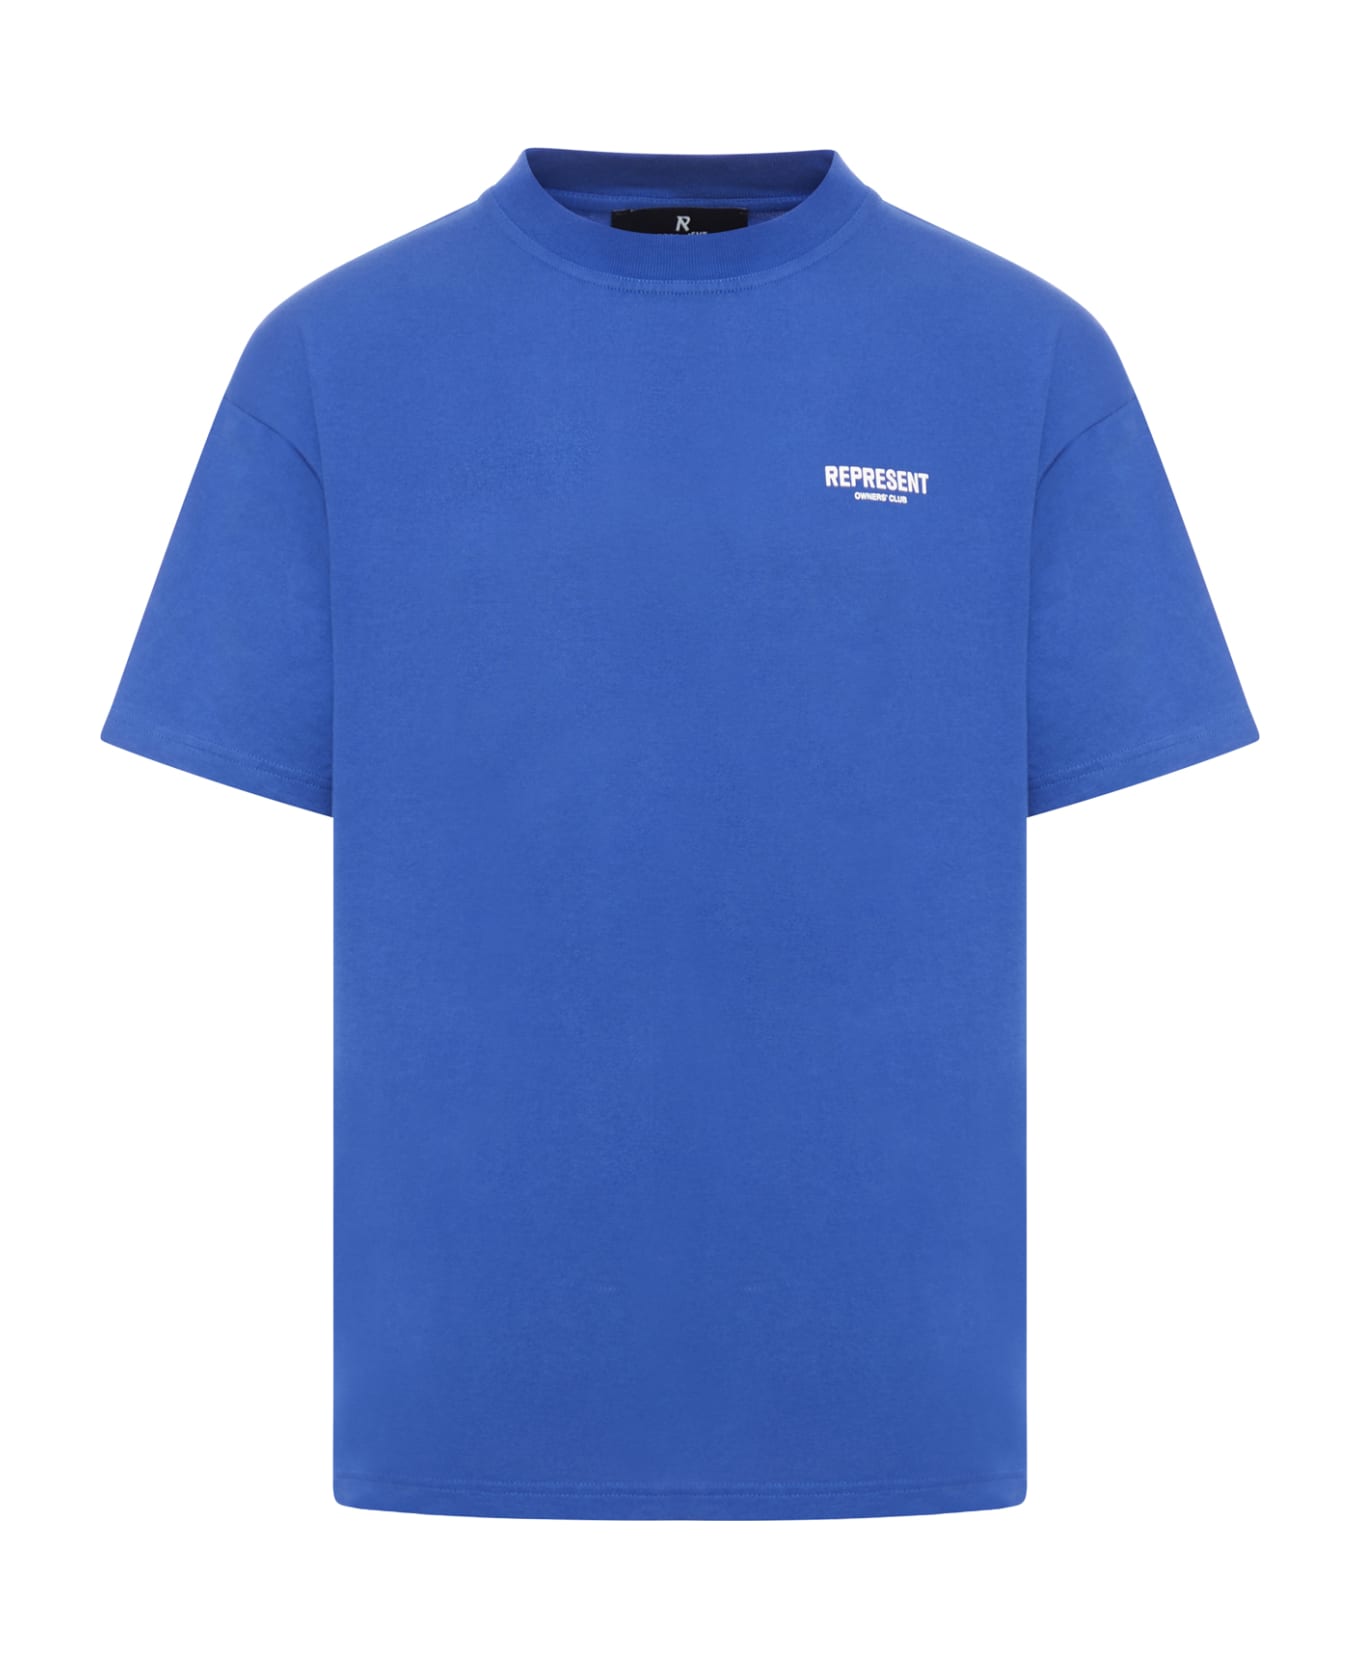 REPRESENT Owners Club T-shirt - Cobalt Blue